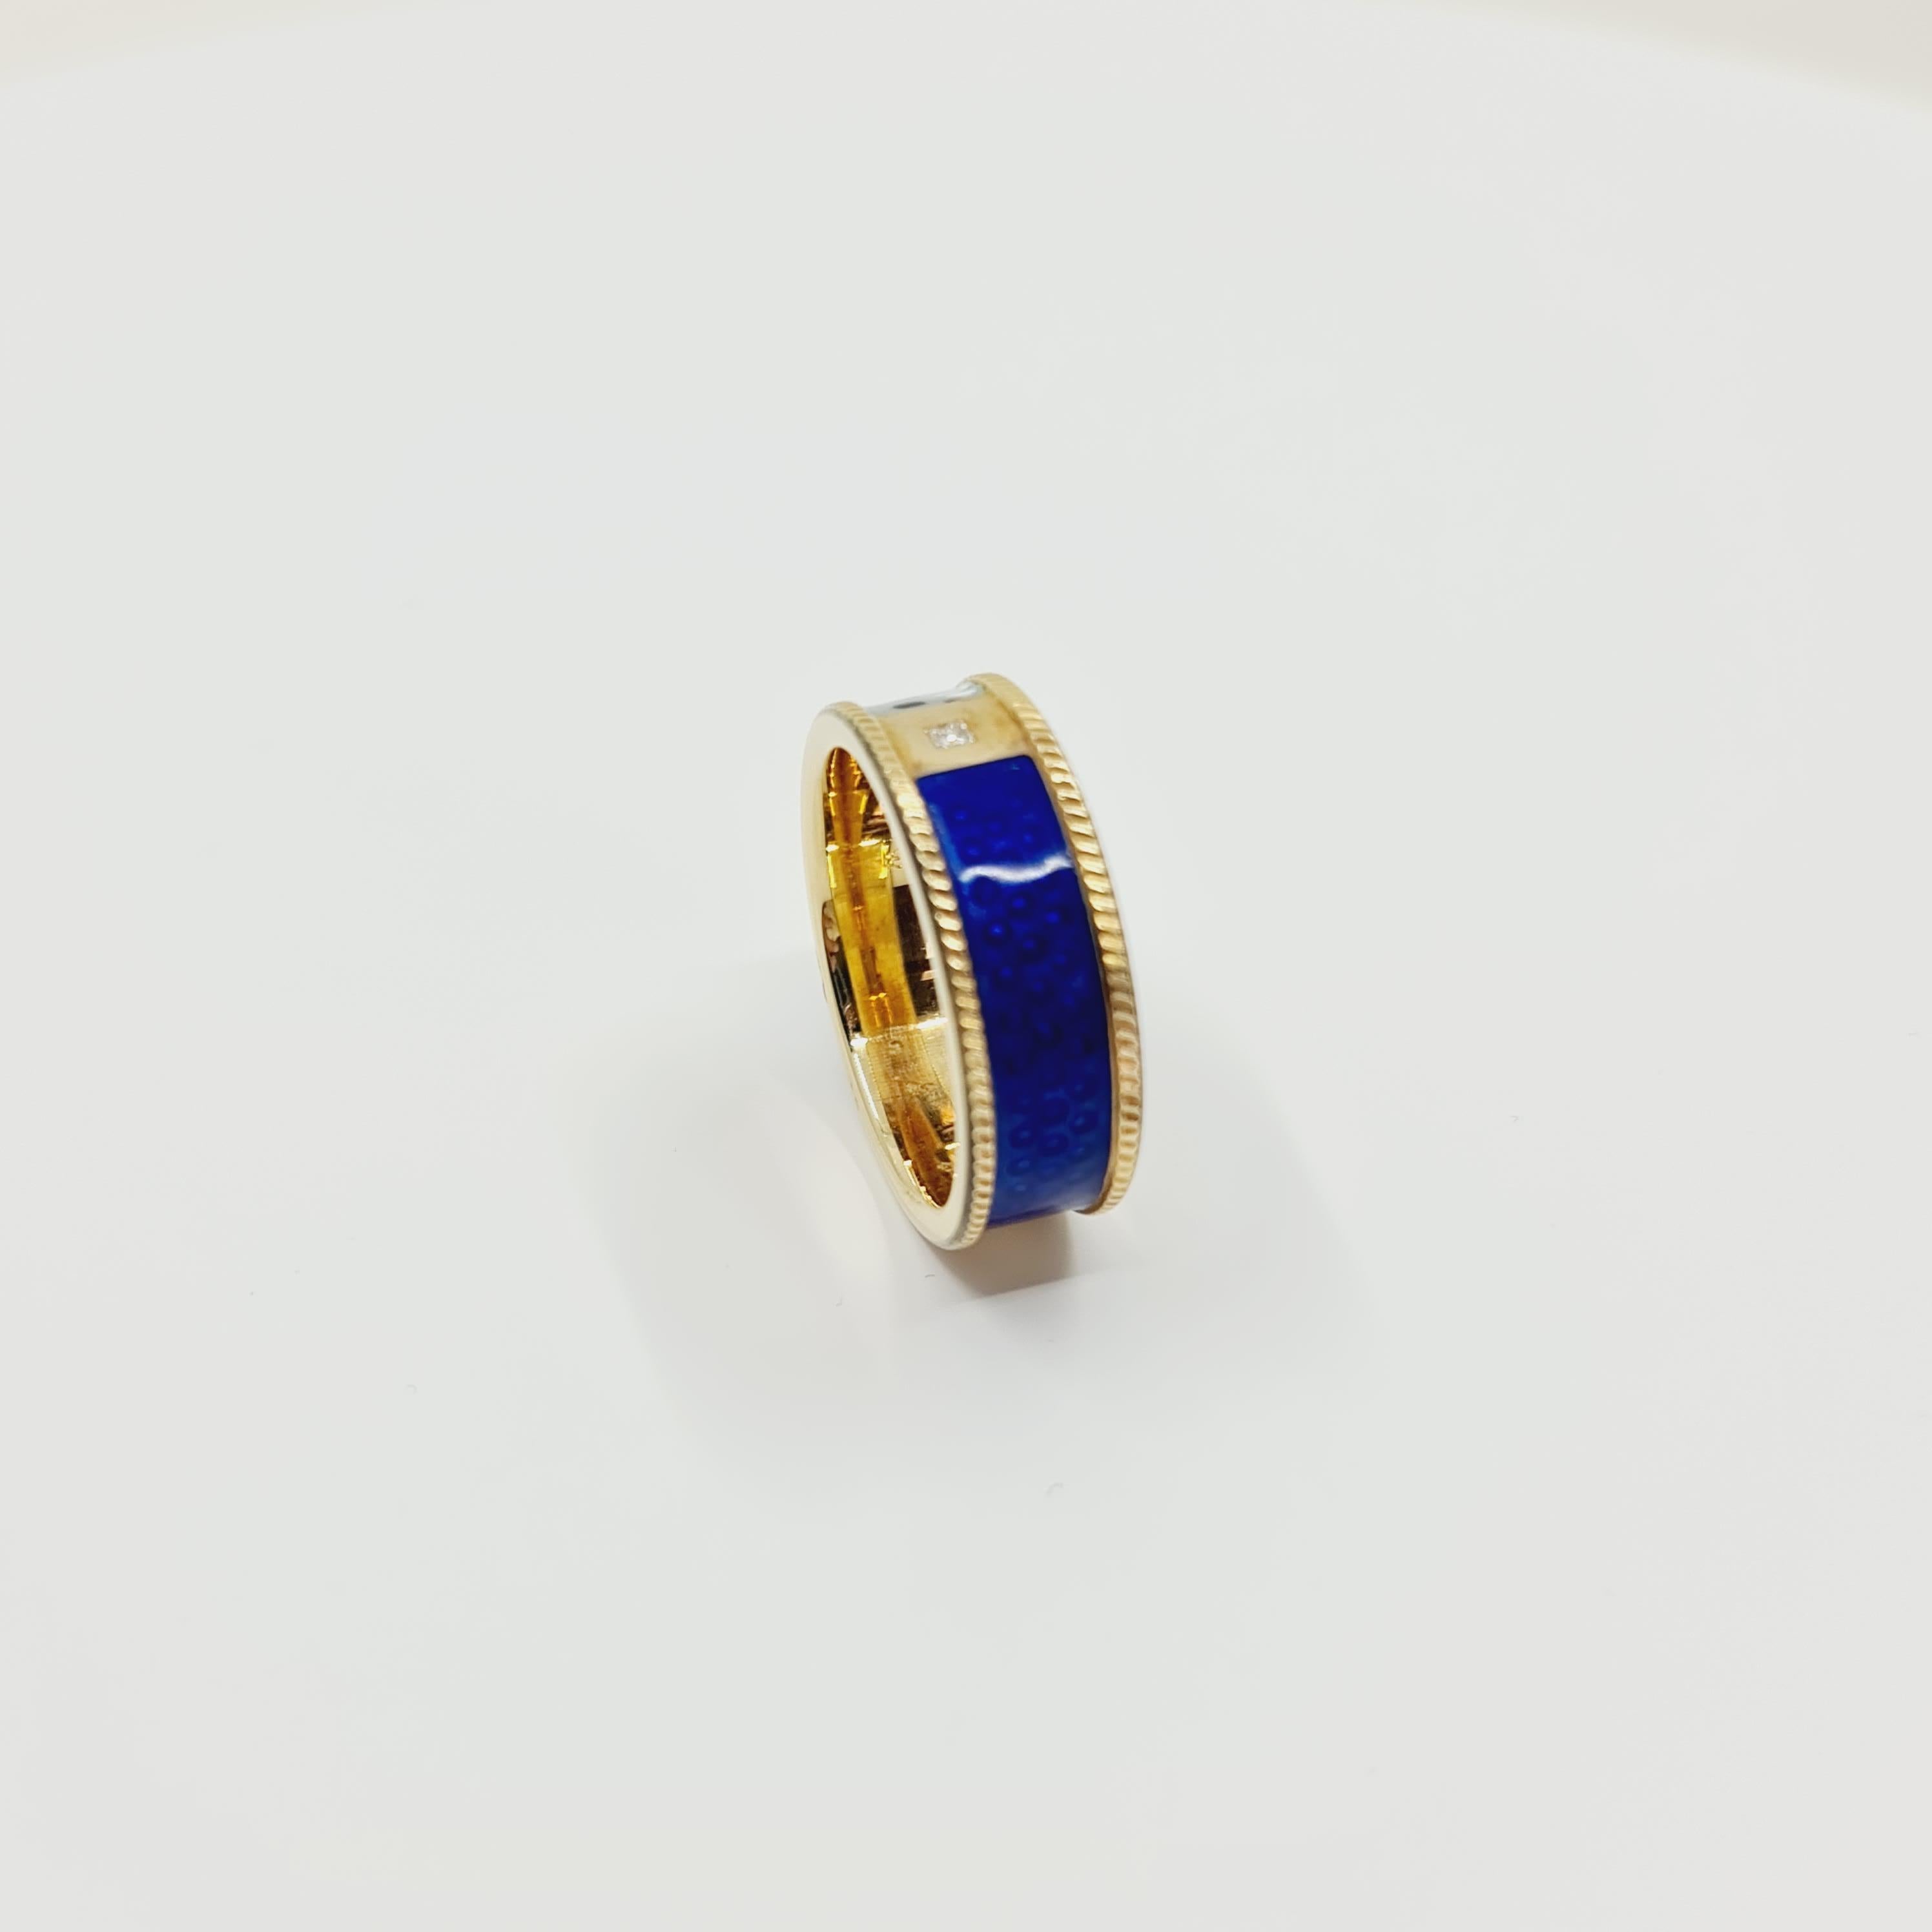 0.05 Carat Princess Cut Diamond Ring G/IF 14k Gold, Blue/Grey/White Enamel For Sale 2